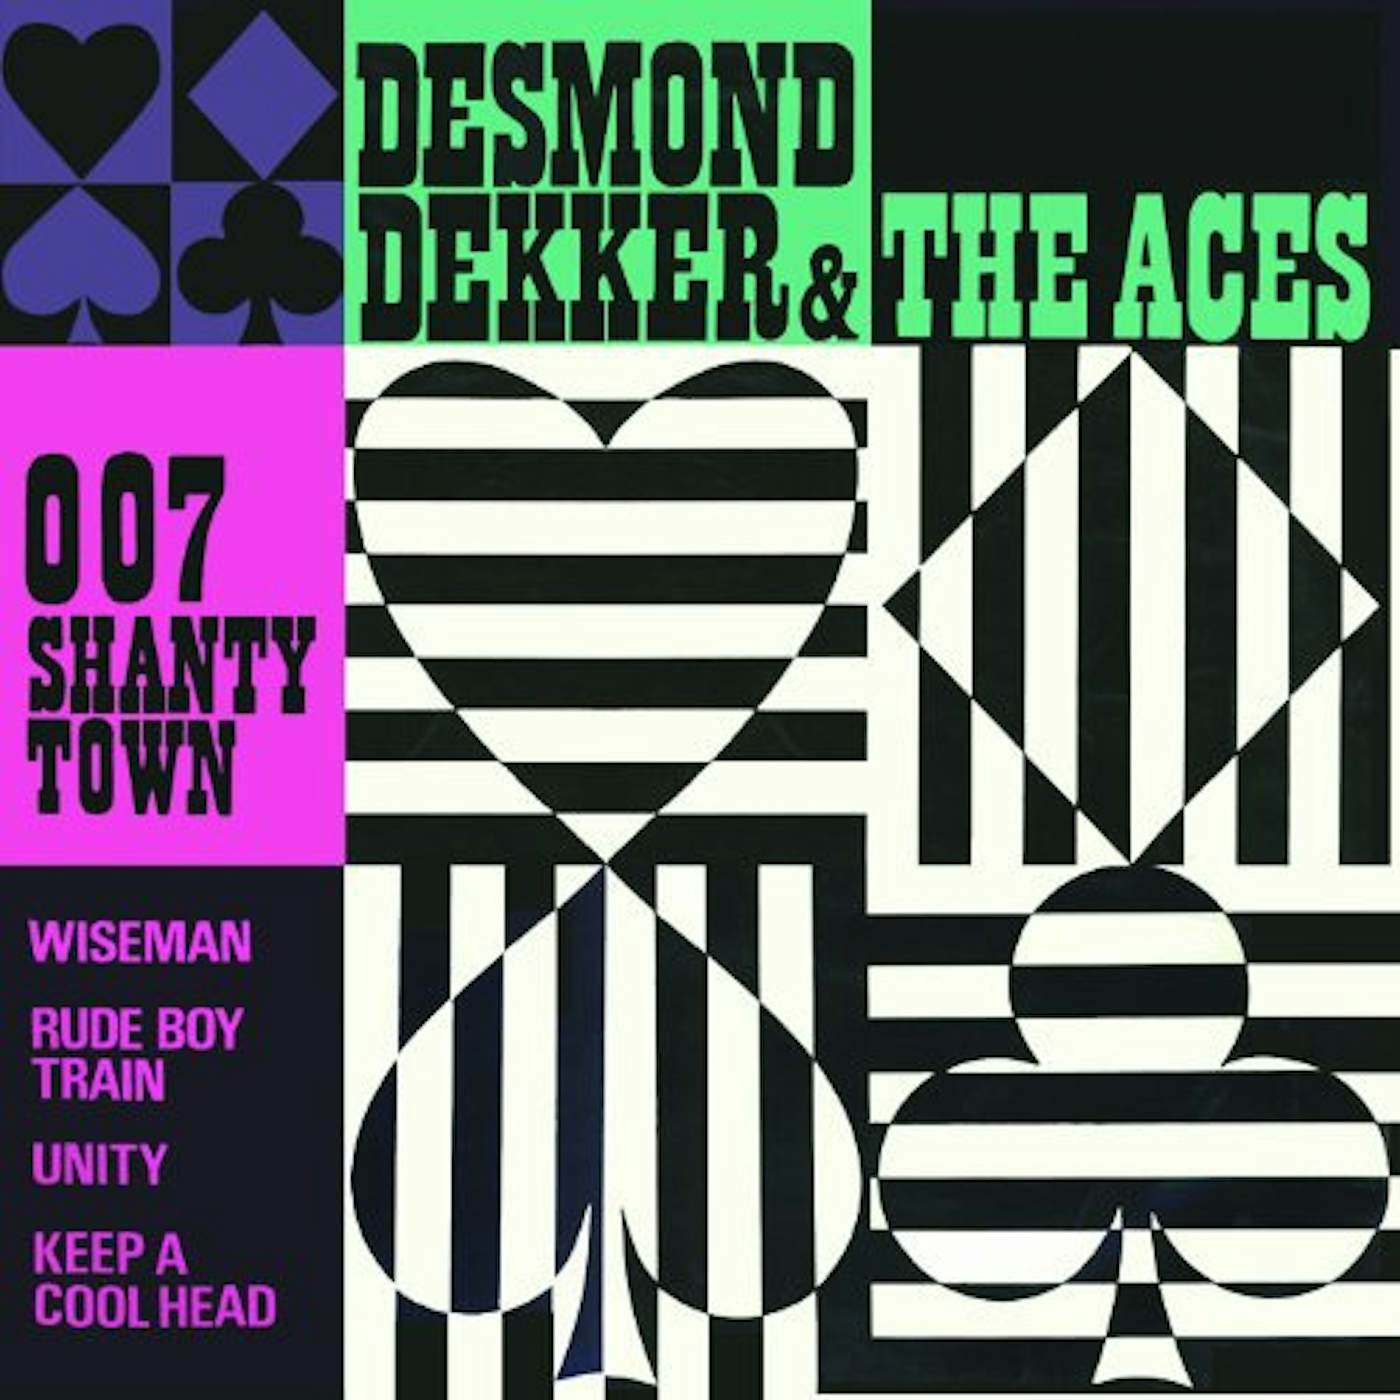 Desmond Dekker & The Aces 0.0.7 SHANTY TOWN CD